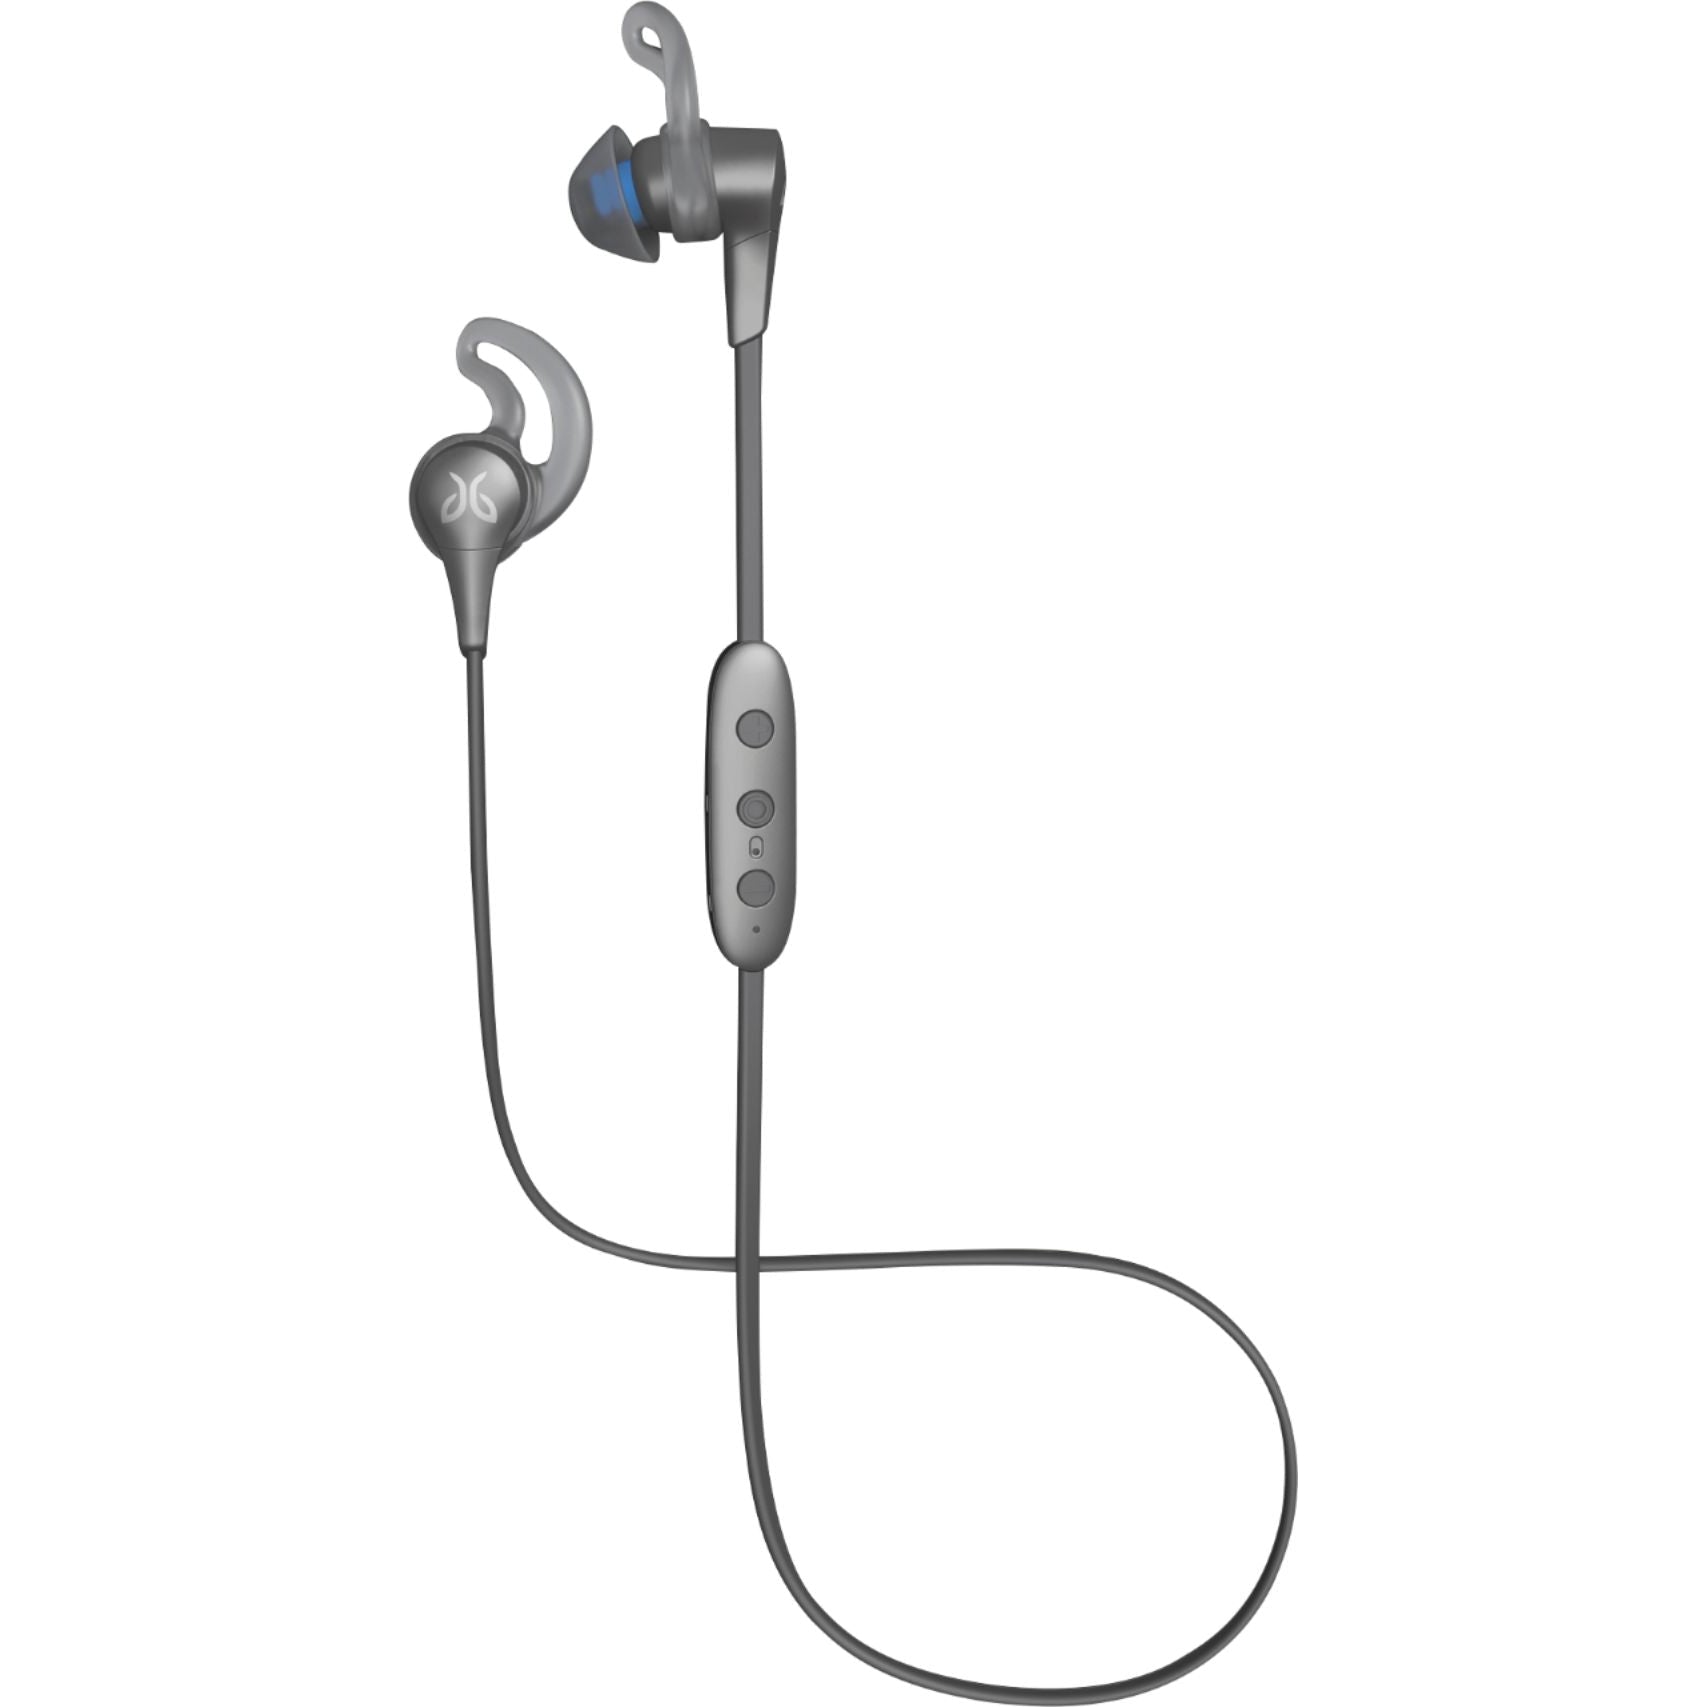 Jaybird - 985-000809 X4 Wireless Headphones - Storm Metallic/Glacier